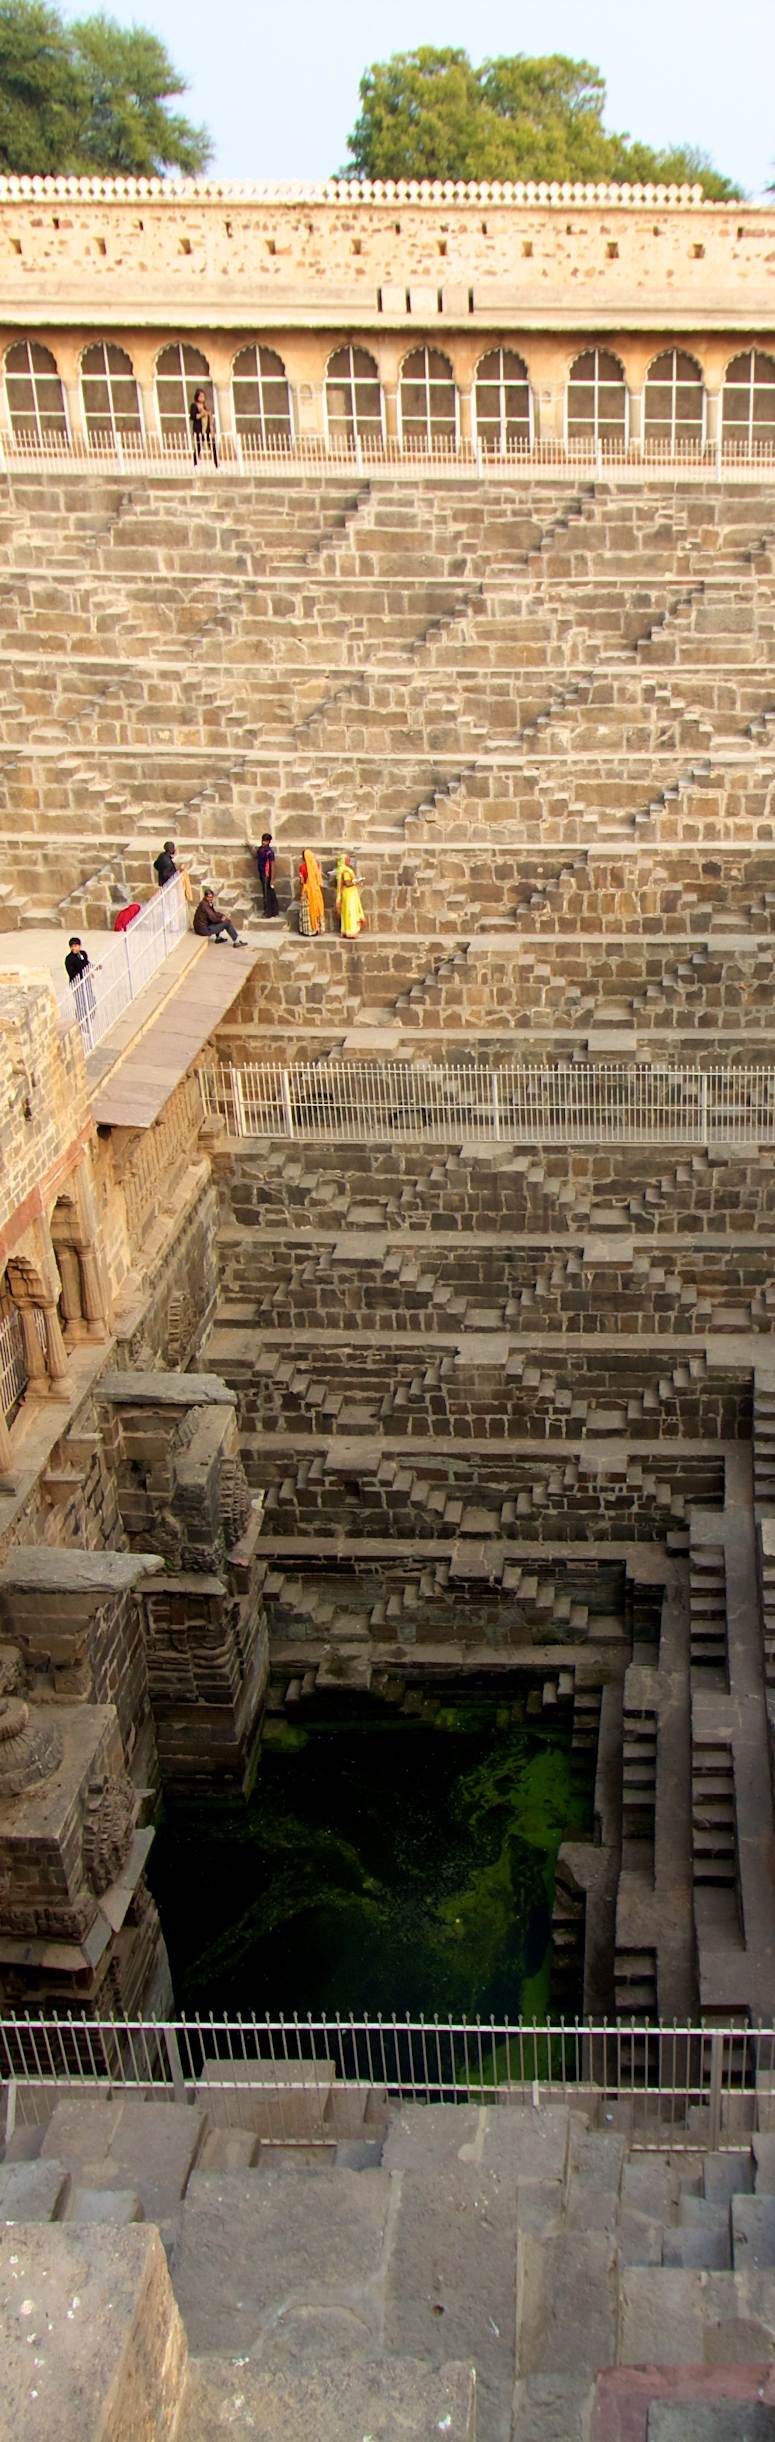 Trappbrunn Chand Baori - massor av trappor i Indien.